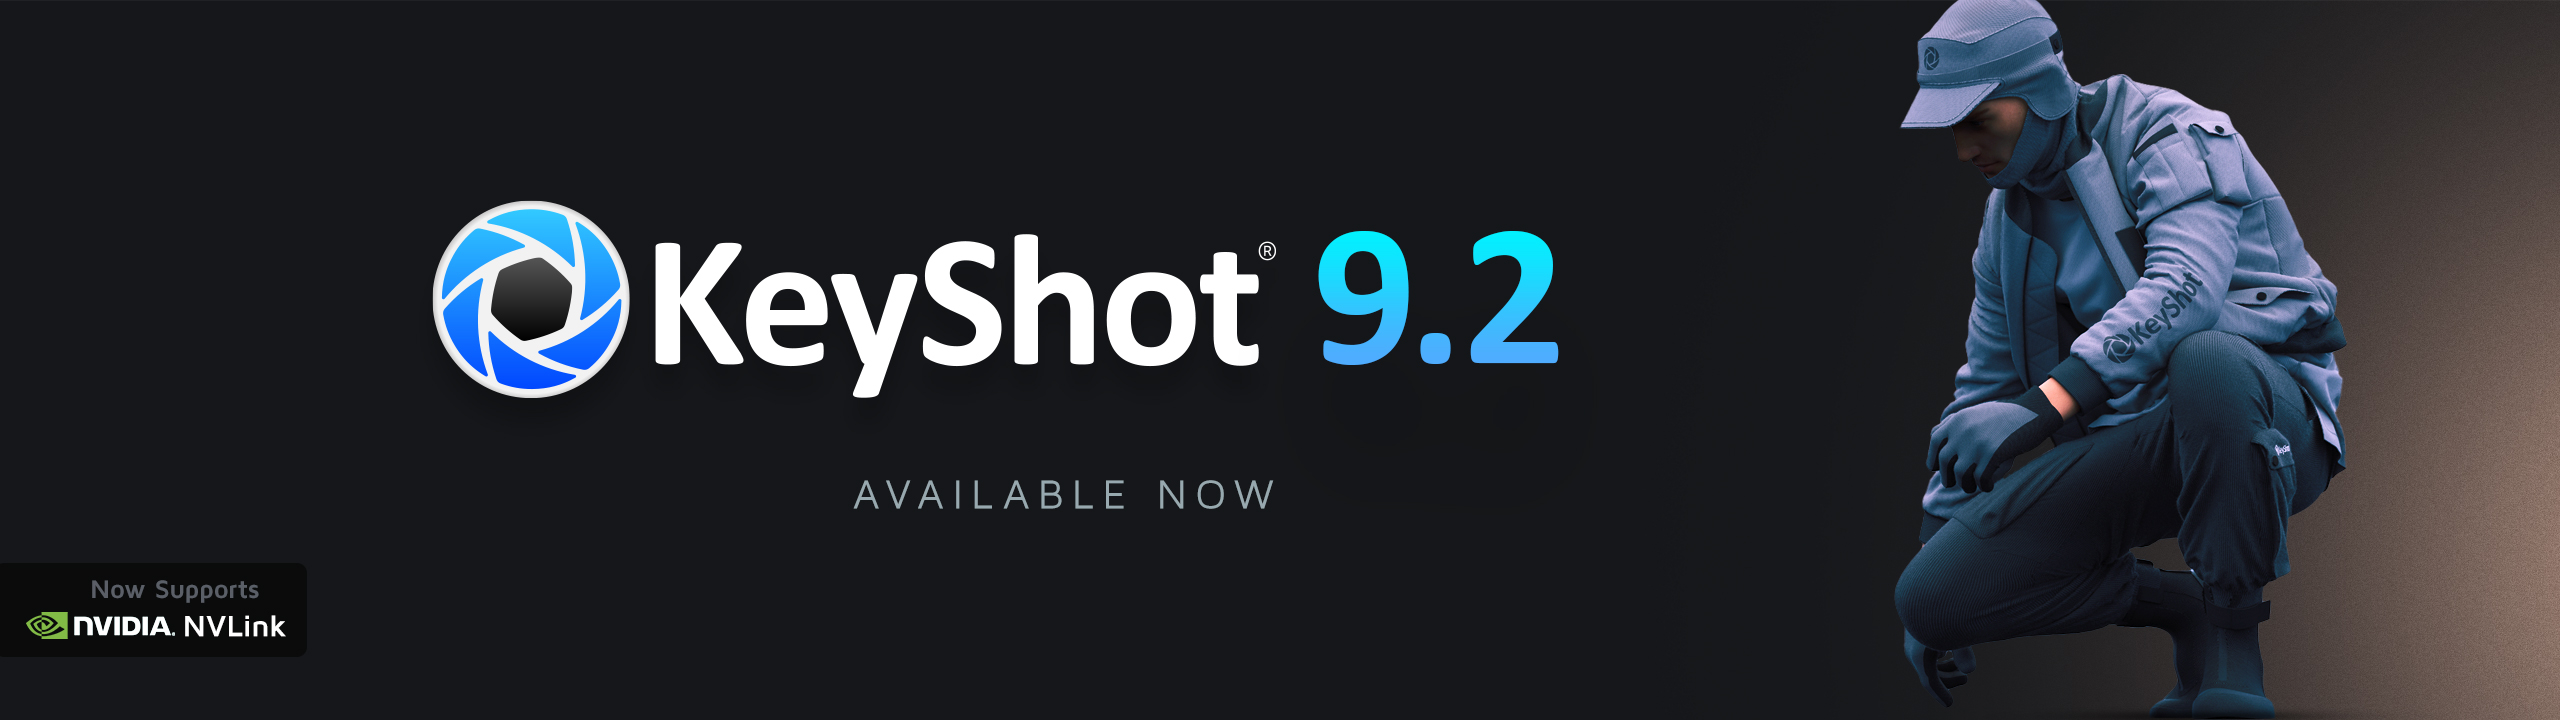 KeyShot 9.2 Now Available